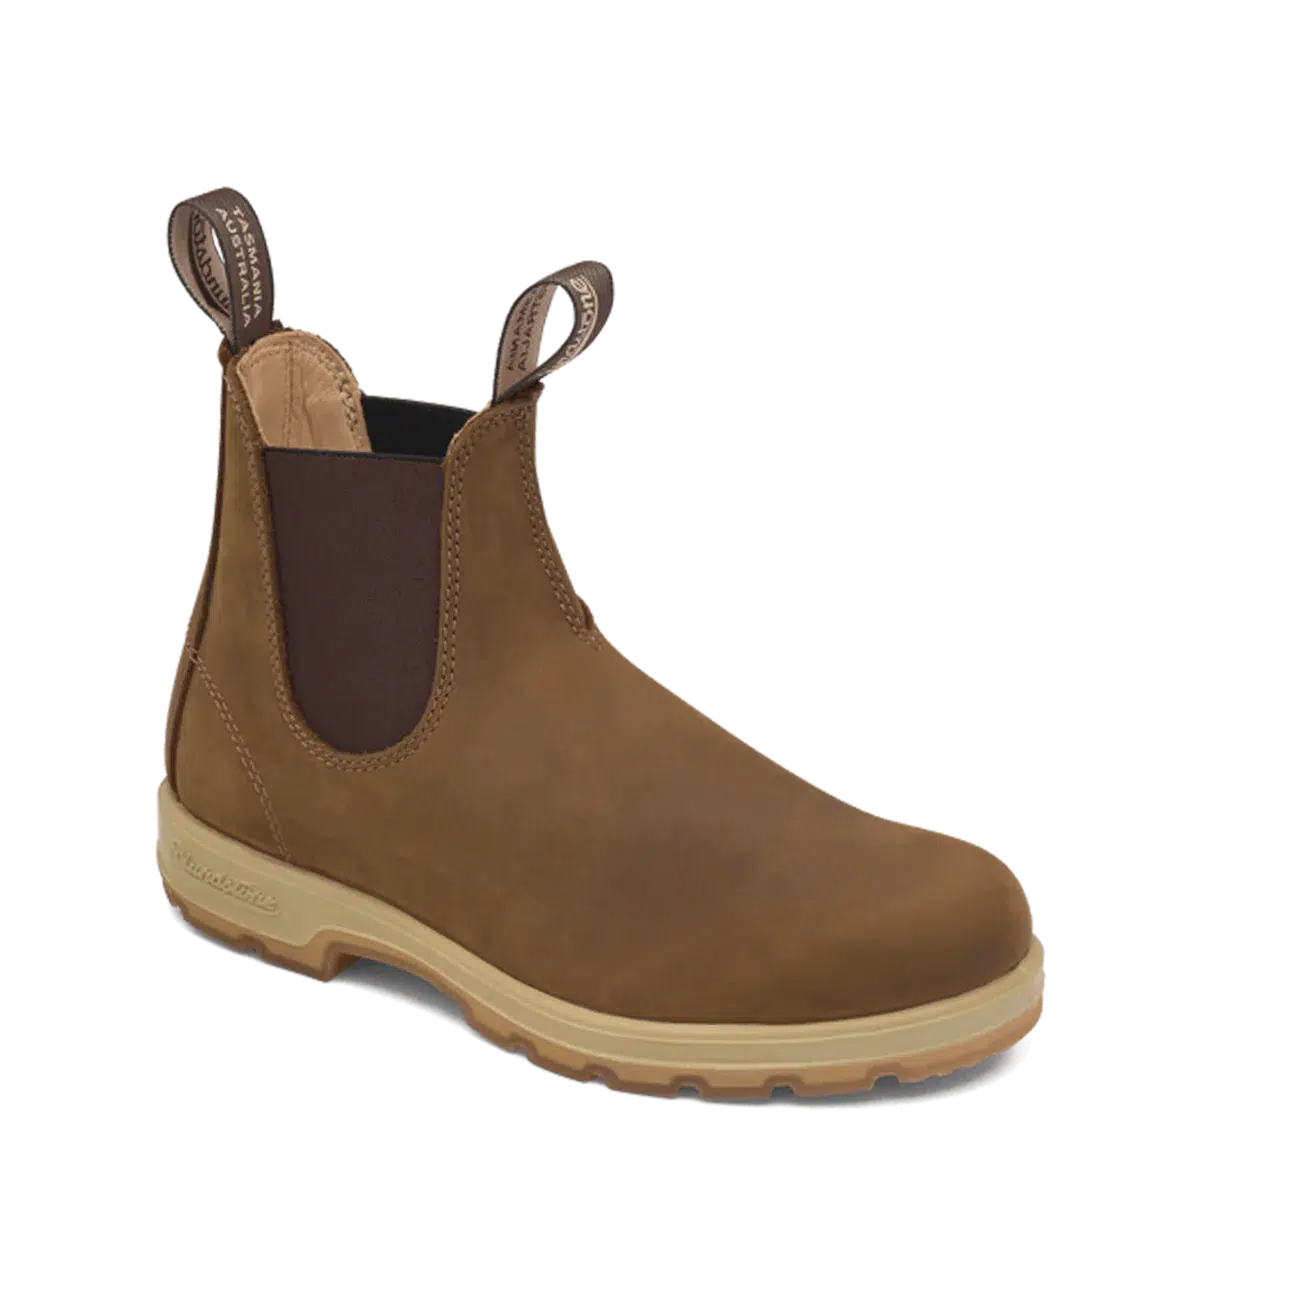 BLUNDSTONE CLASSICS SADDLE BROWN W/ GUM SOLE-MENS BOOTS-BLUNDSTONE-JB Evans Fashions & Footwear